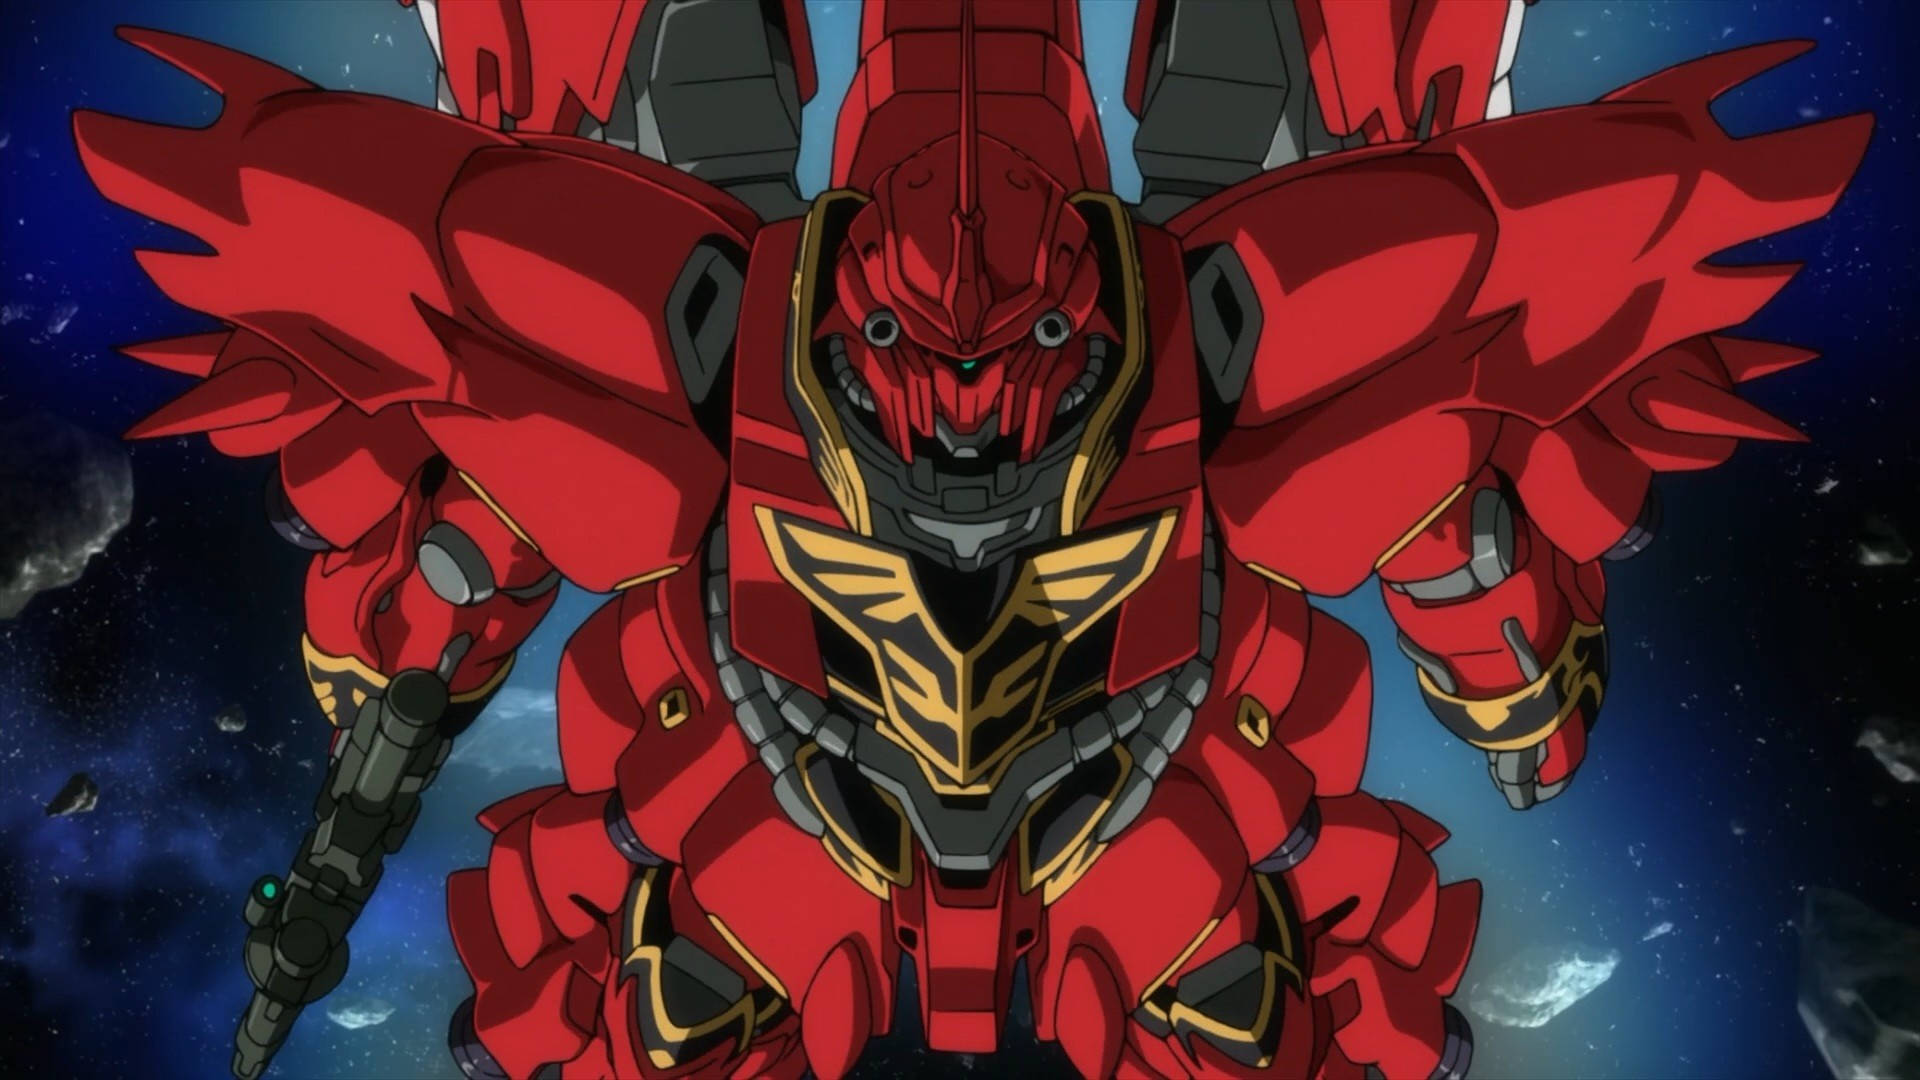 Rød Mobil Suit Gundam I Rummet Wallpaper